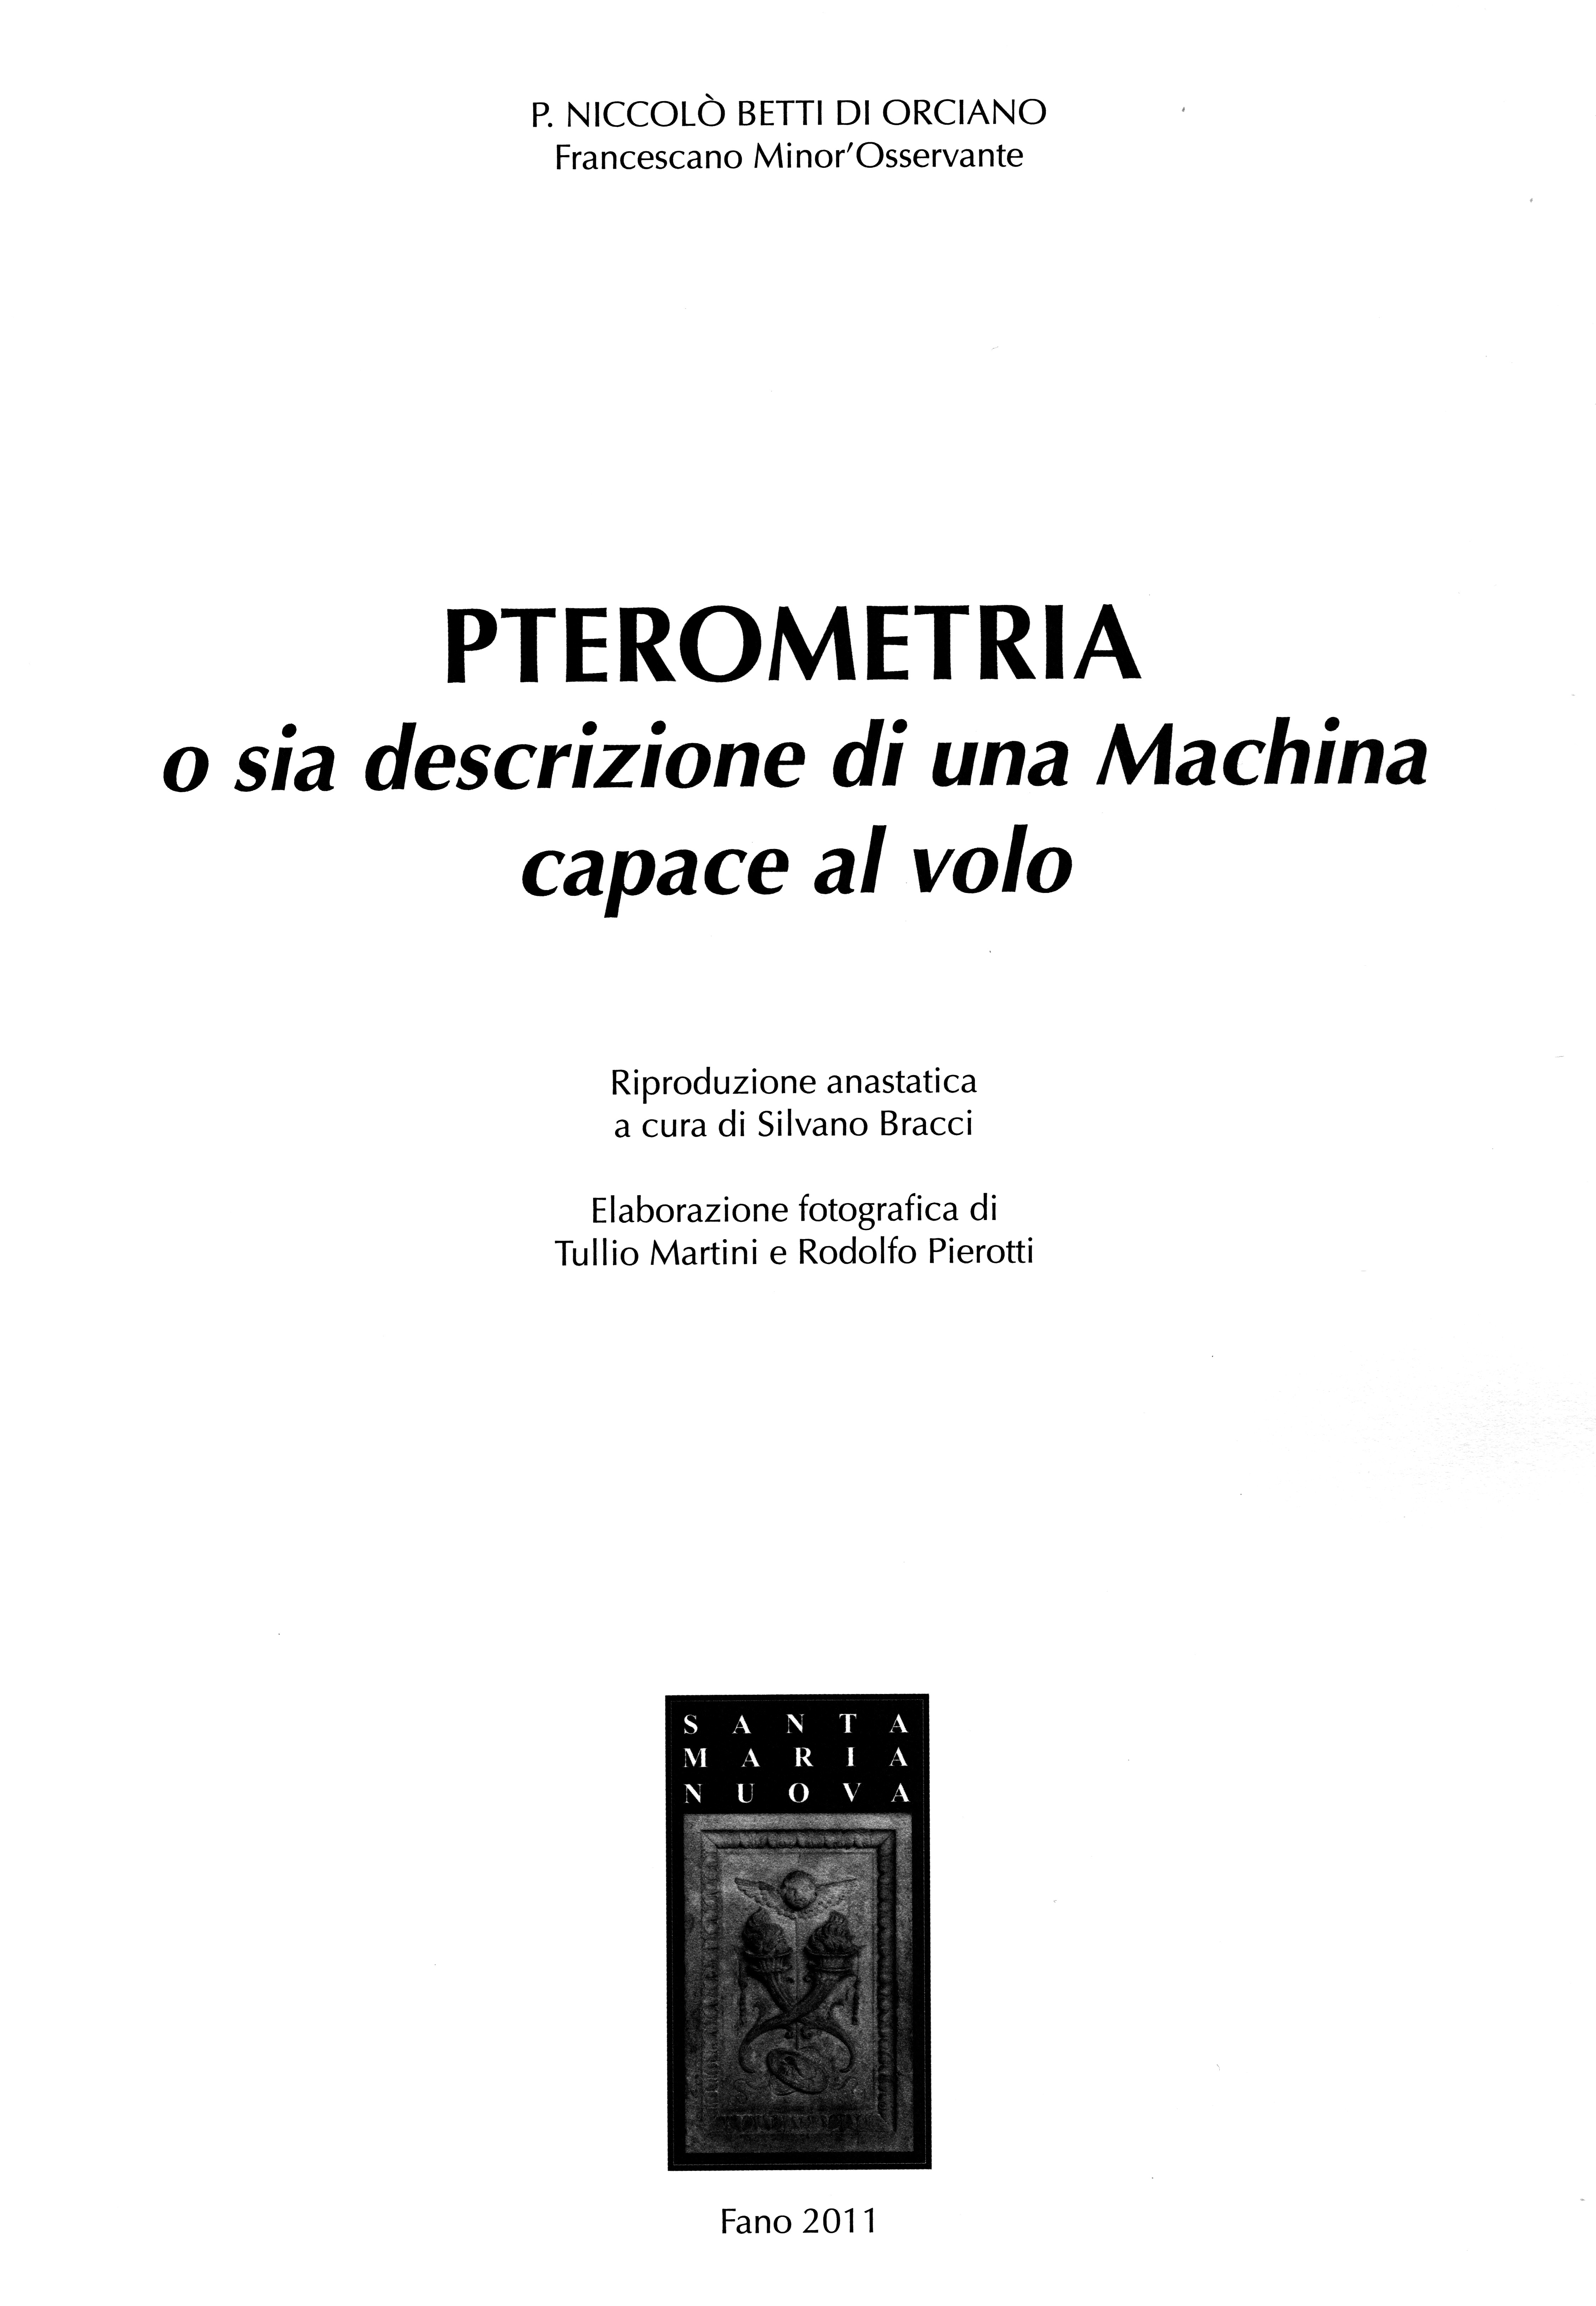 Pterometria 1